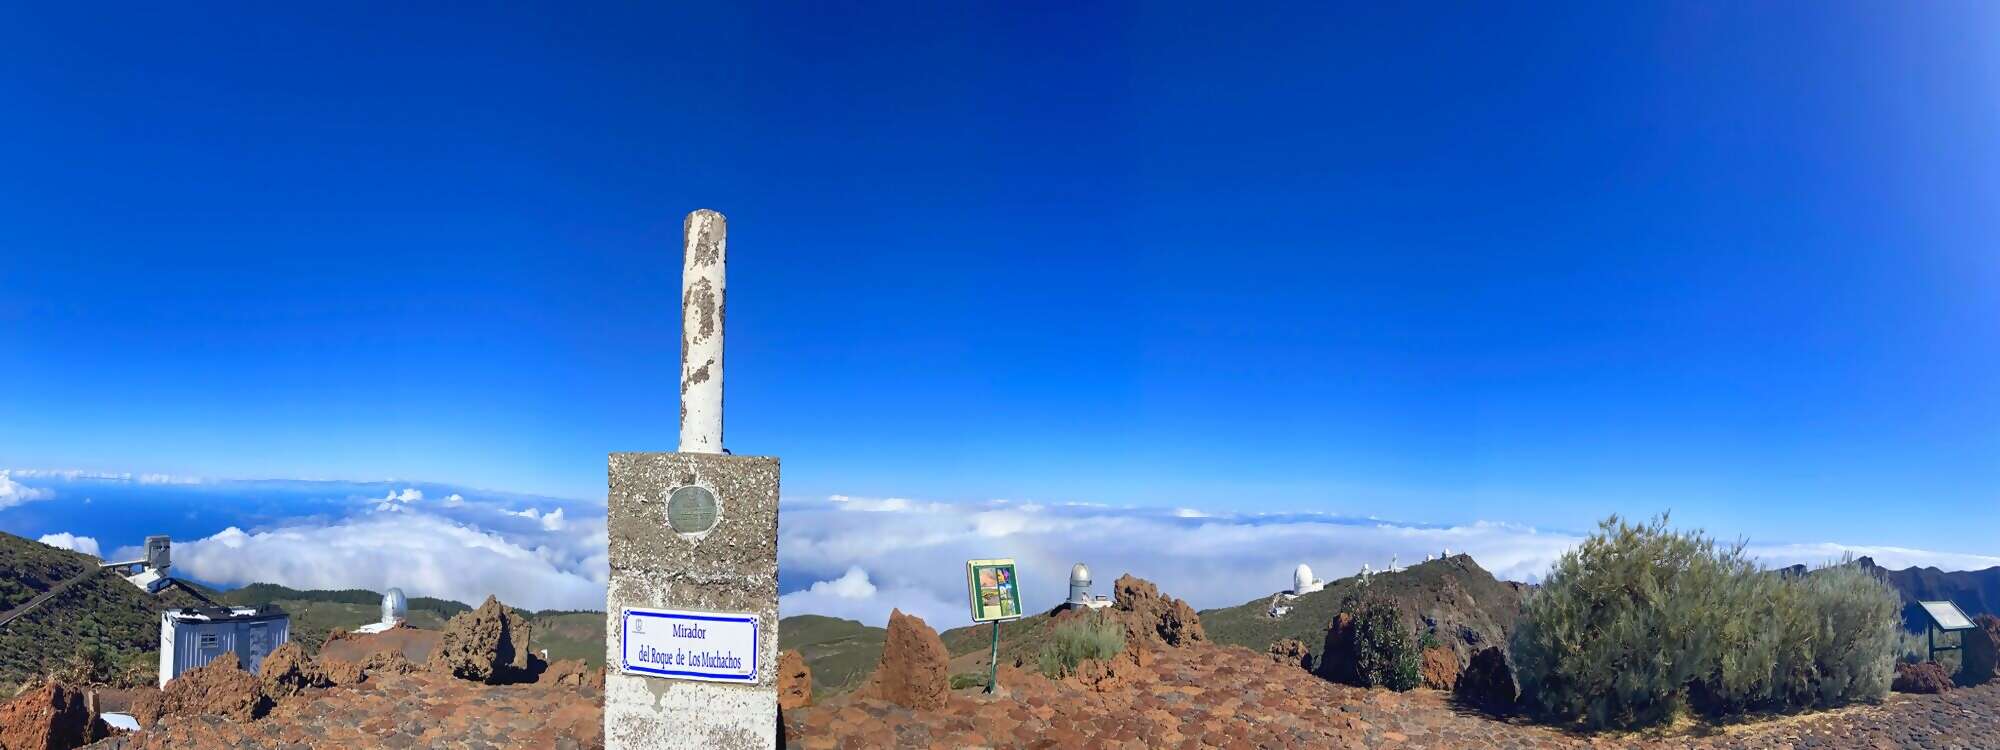 Rundblick Roque de los Muchachos Observatorium auf 2400 Meter Seehoehe auf La Palma